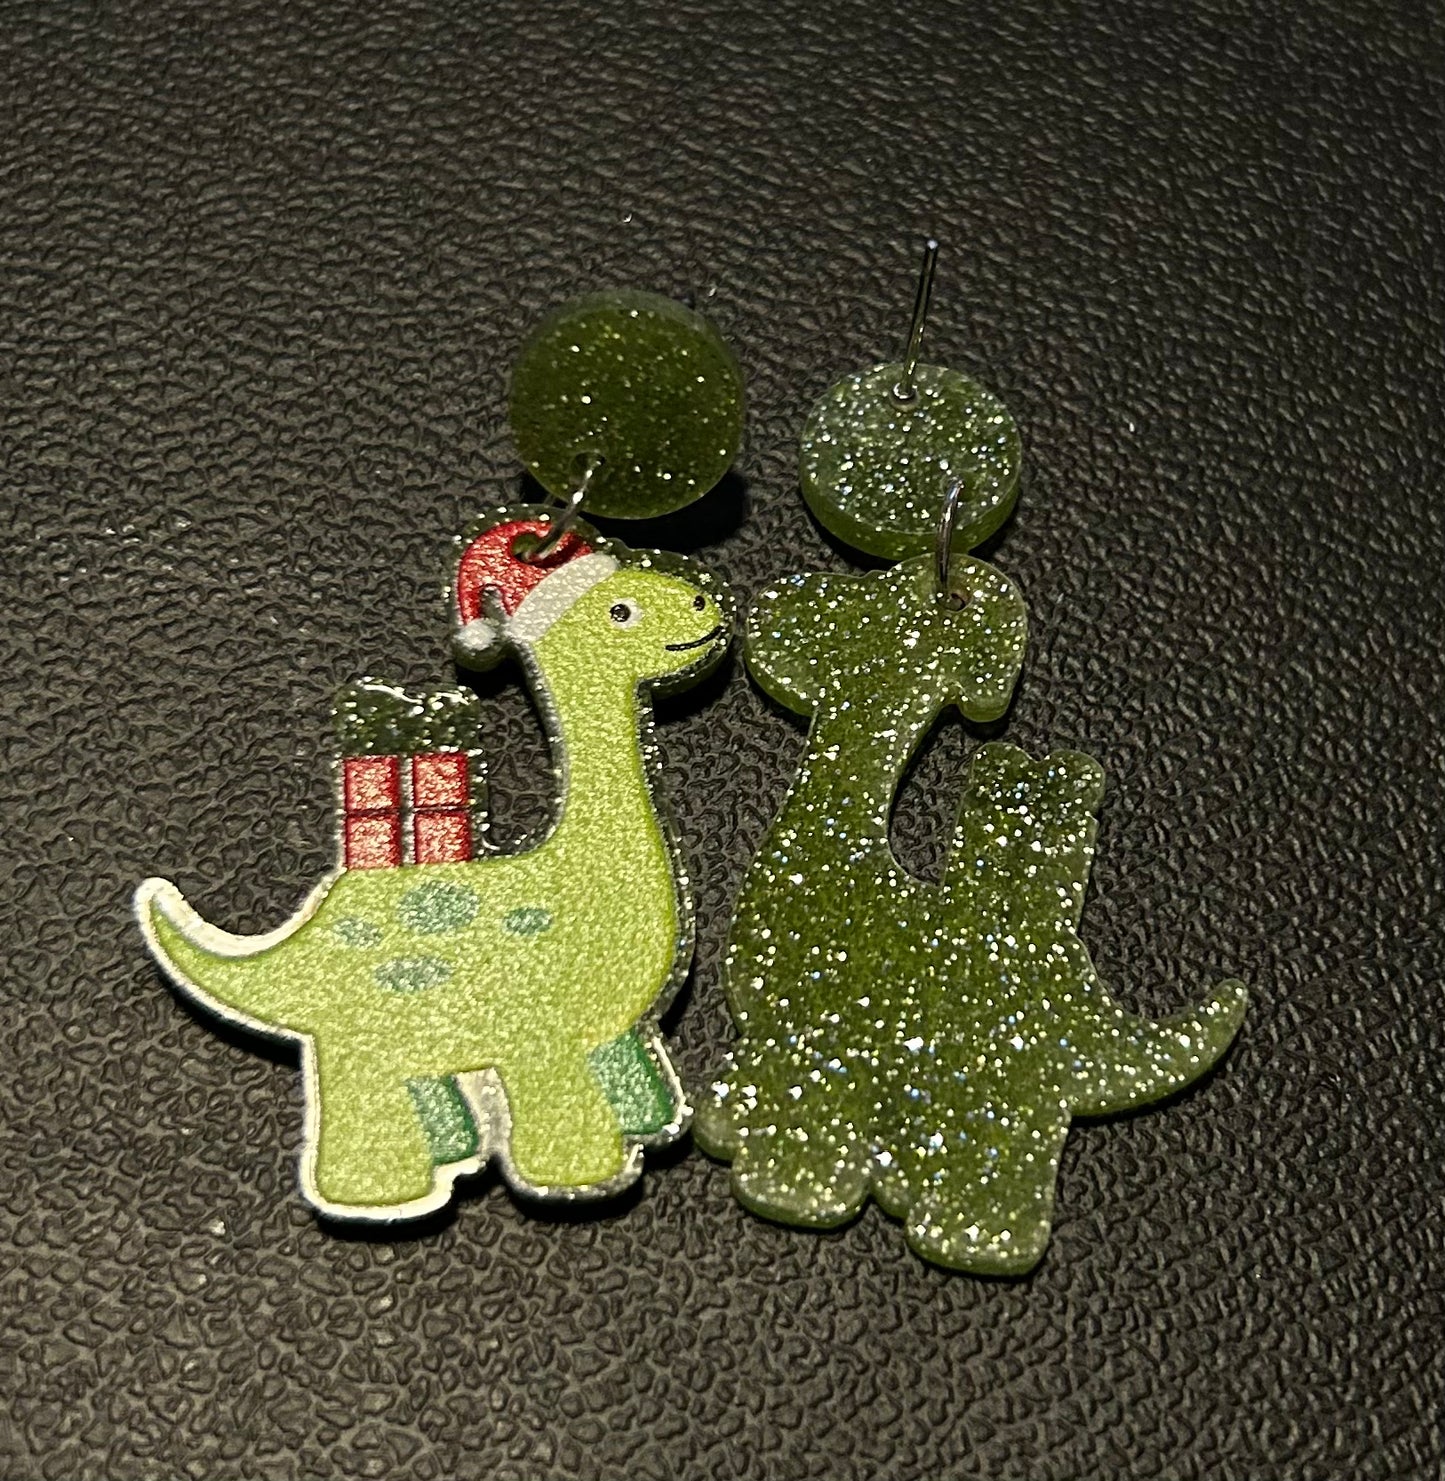 Dinousars Holiday Earrings